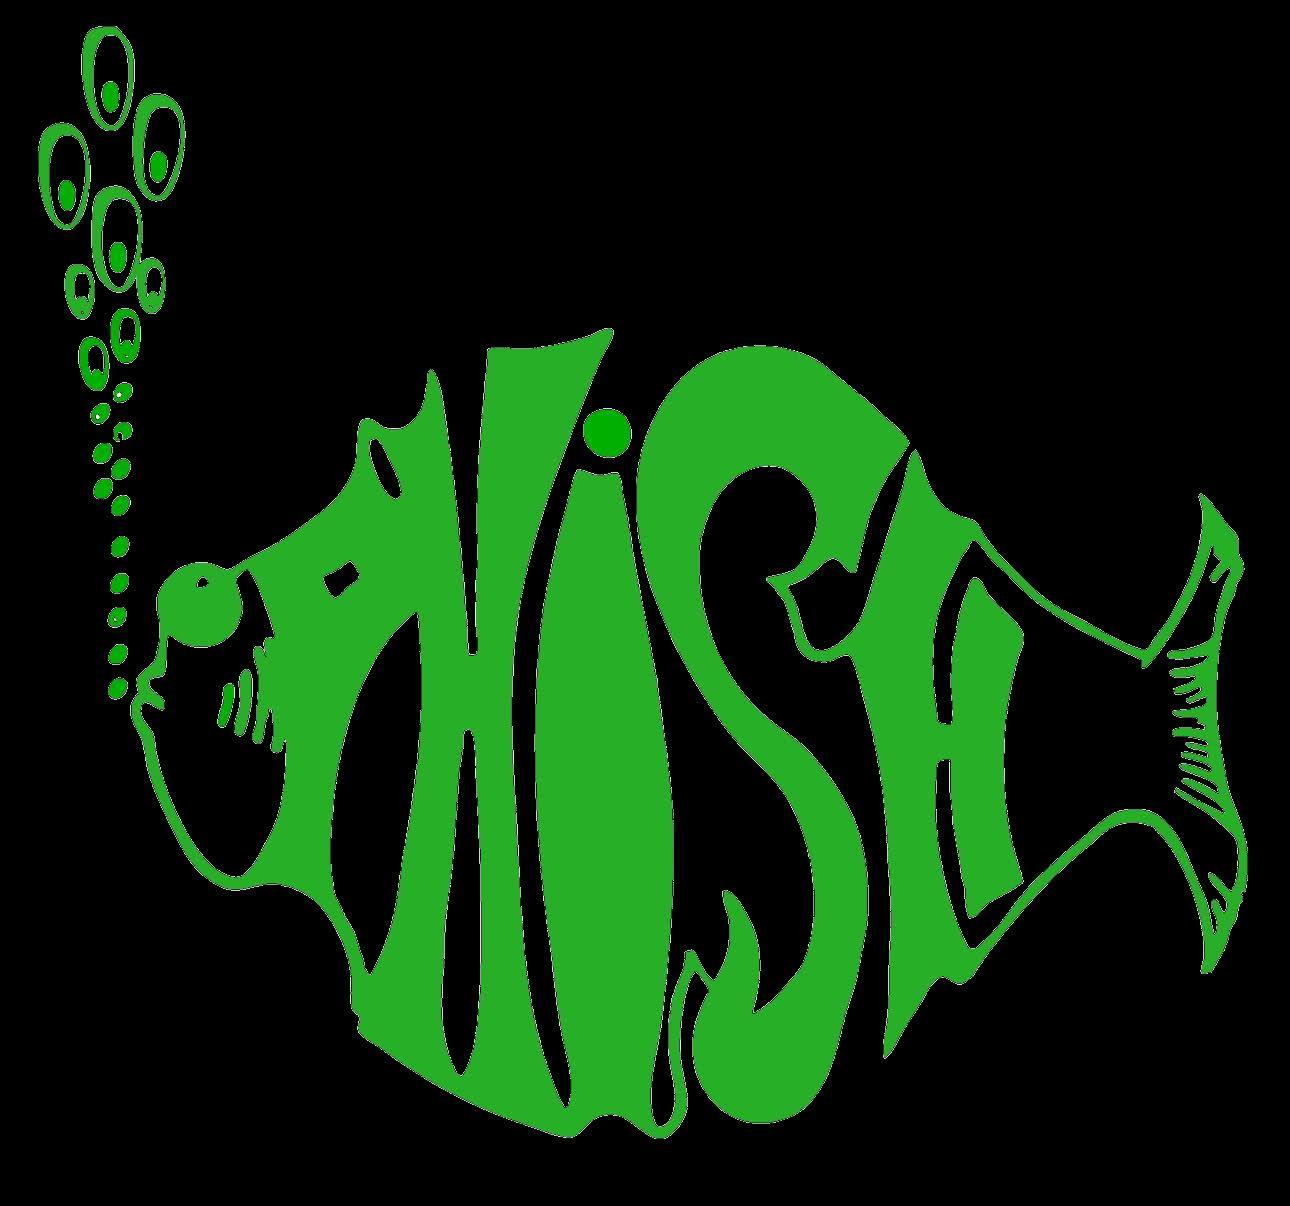 Phish Logo - High Res Phish logo Wallpaper for iphone????, Phish Discussion Topic ...